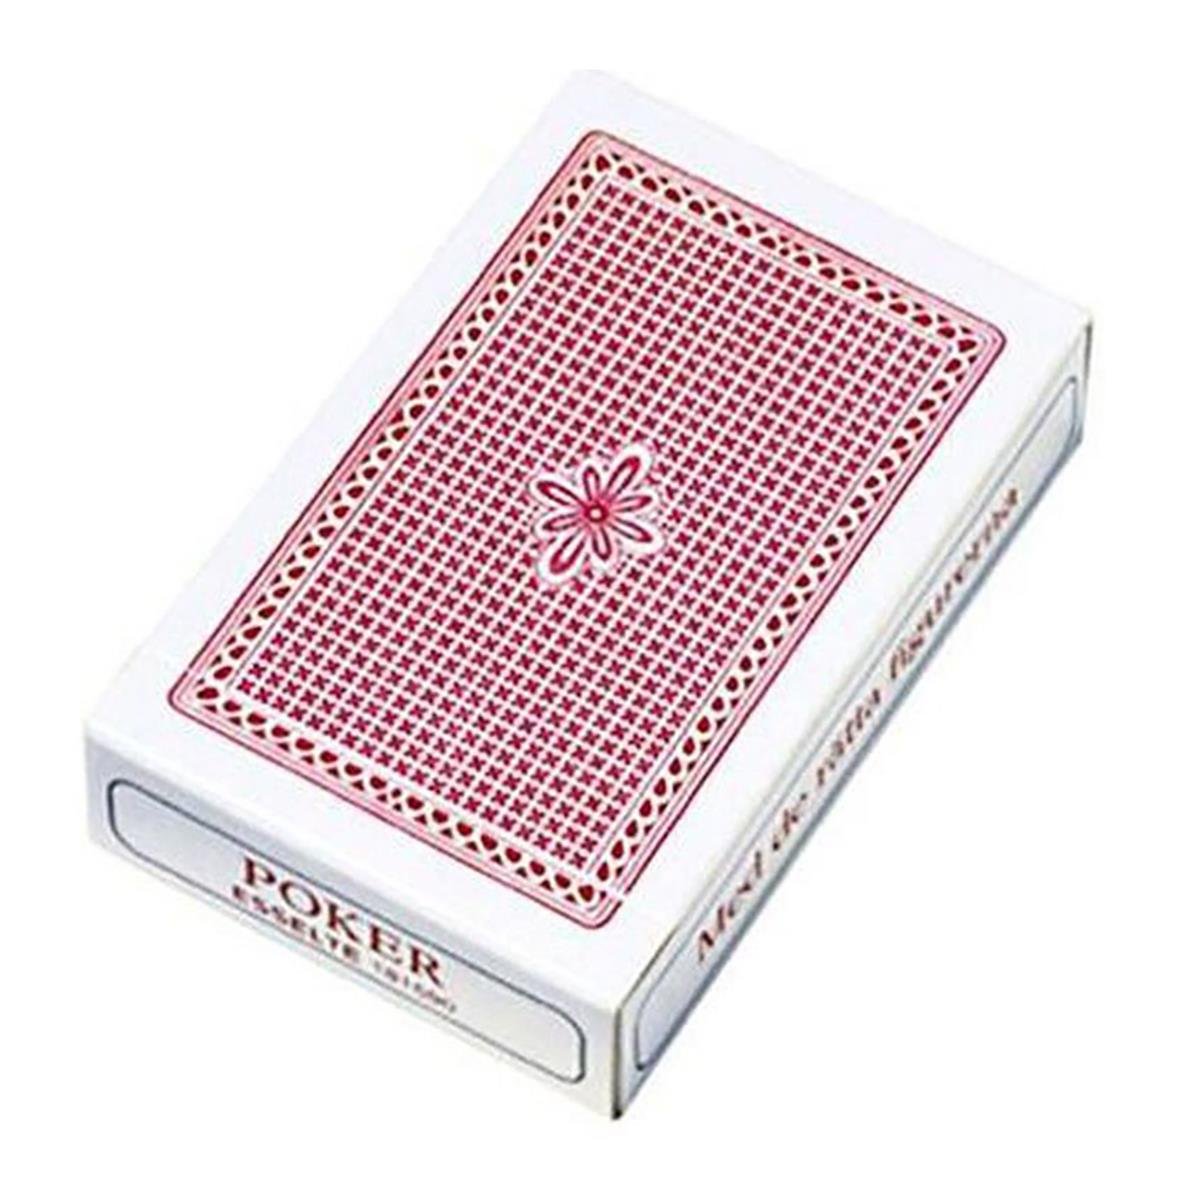 Spelkort Öbergs Poker röd 10090004